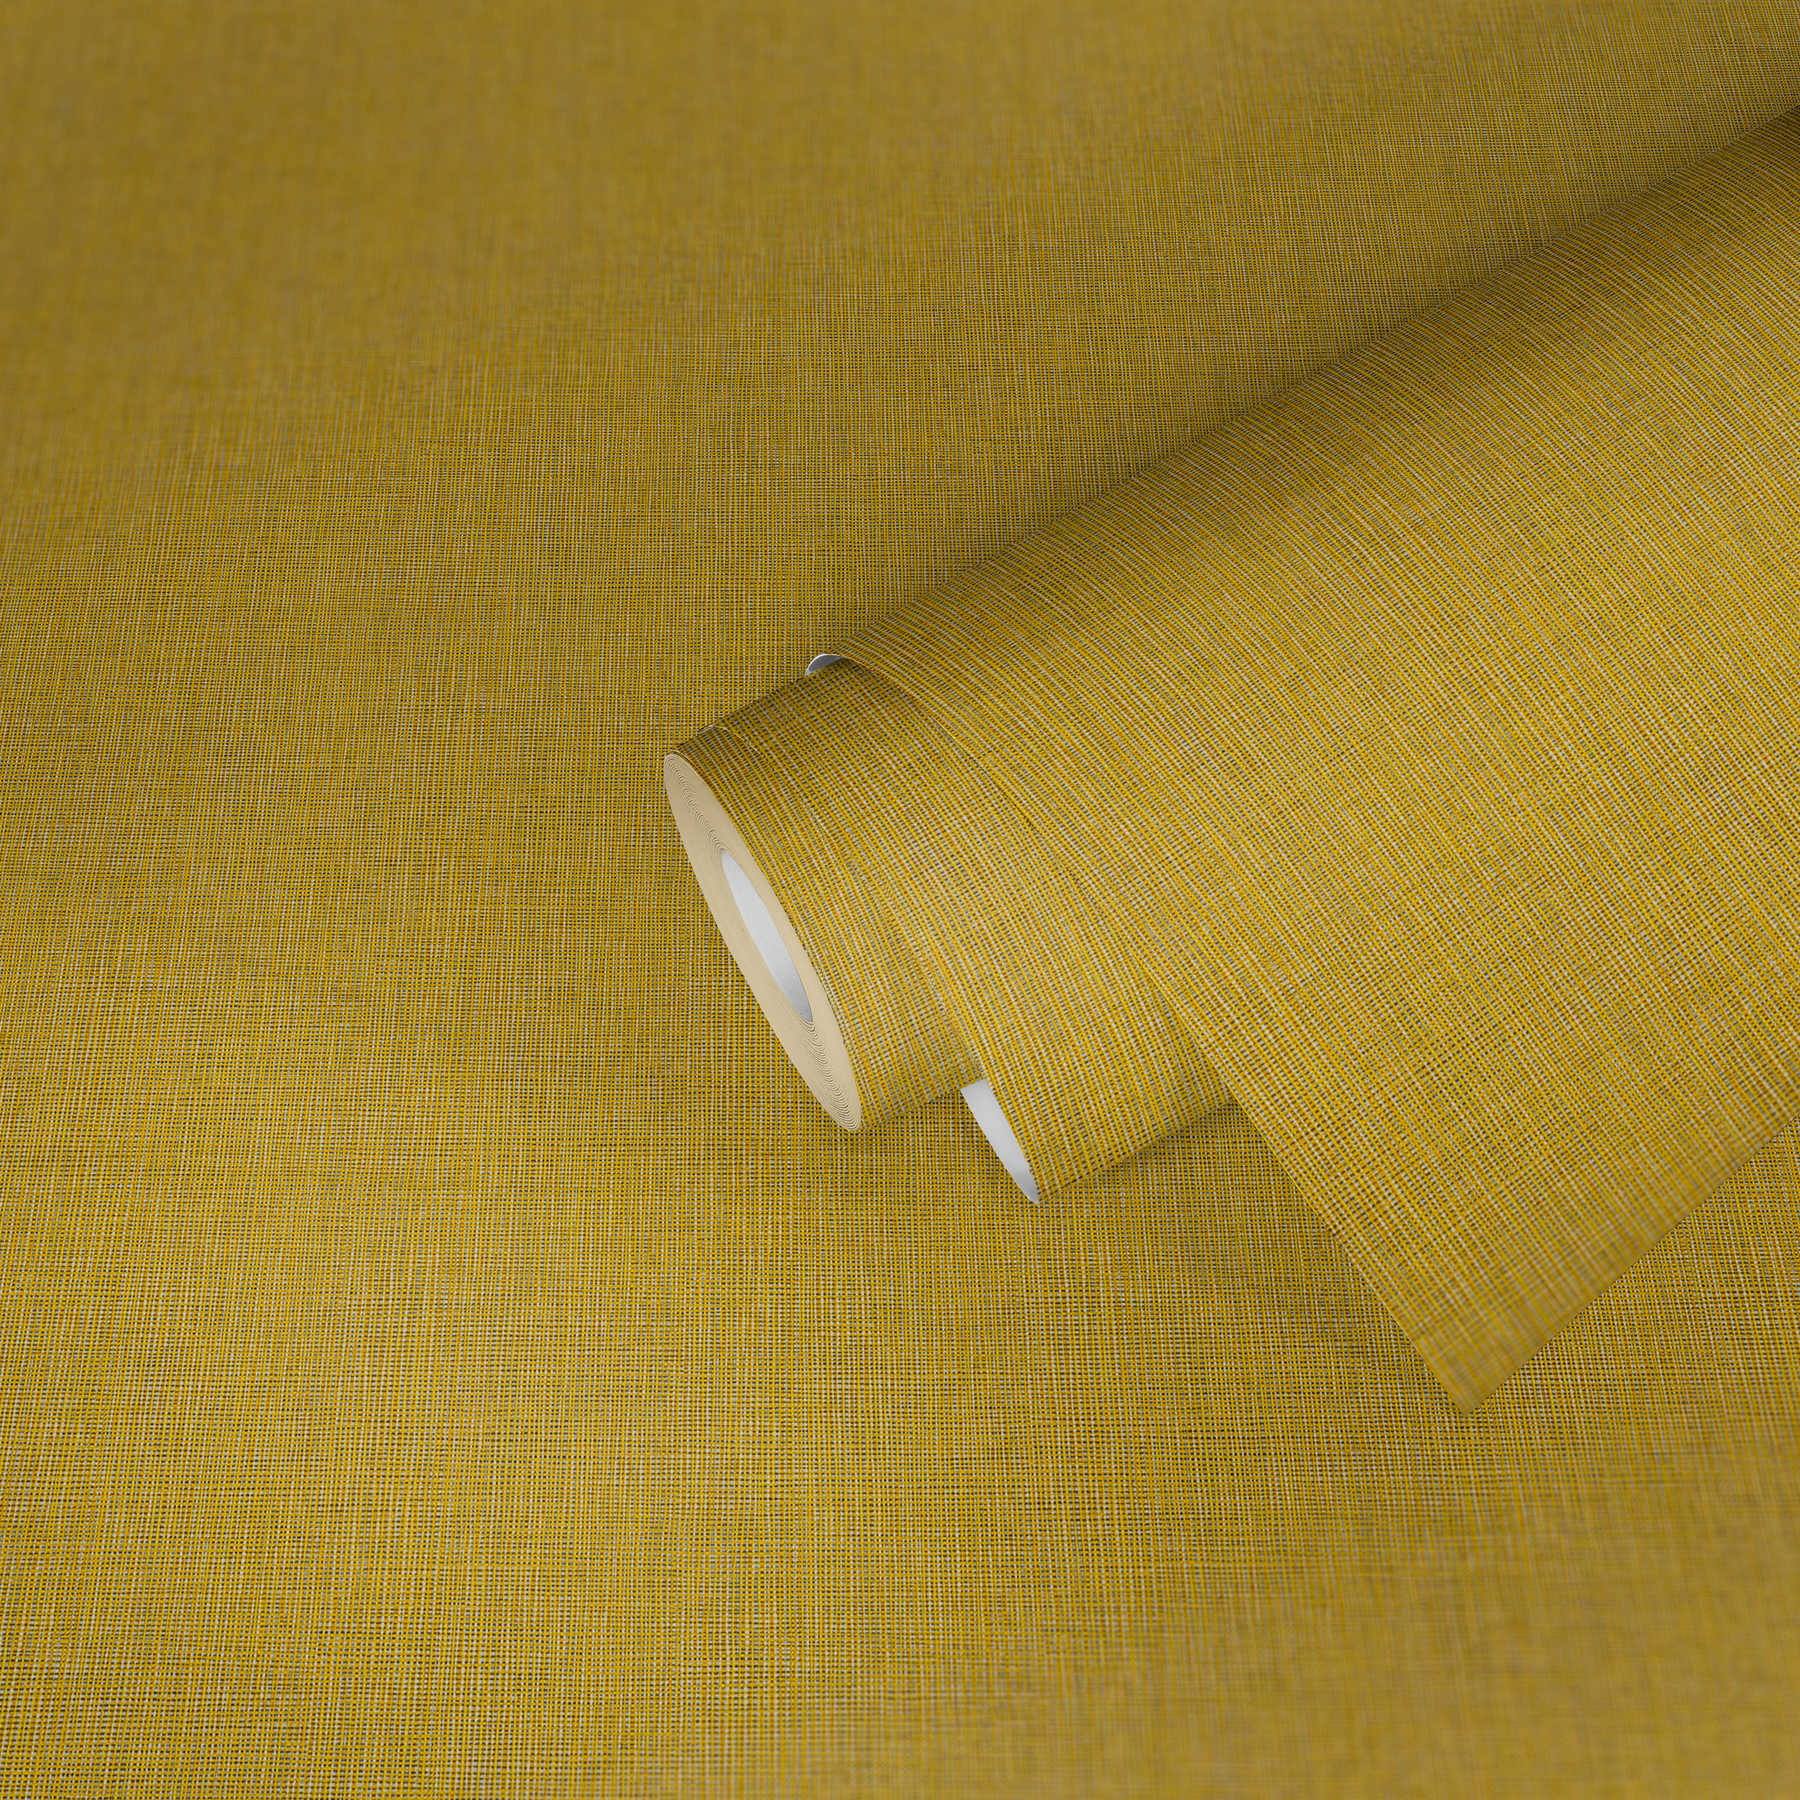             Uni-Tapete Textil Optik mit Details in Silber & Grau – Gelb, Grau, Silber
        